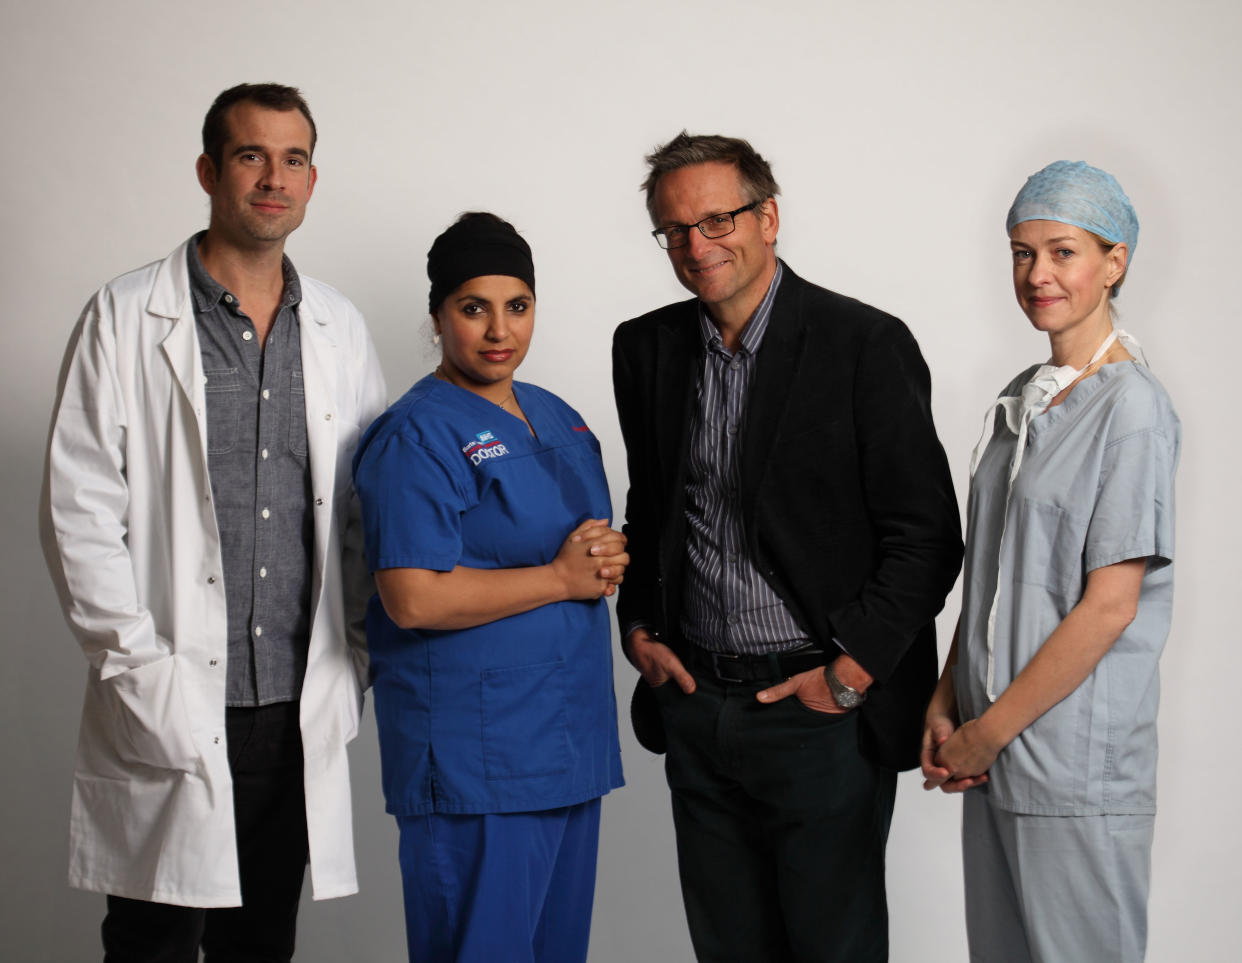 Dr Chris van Tulleken, Dr Saleyha Ashan, Dr Michael Mosley, Miss Gabriel Weston pictured in Trust Me, I'm A Doctor